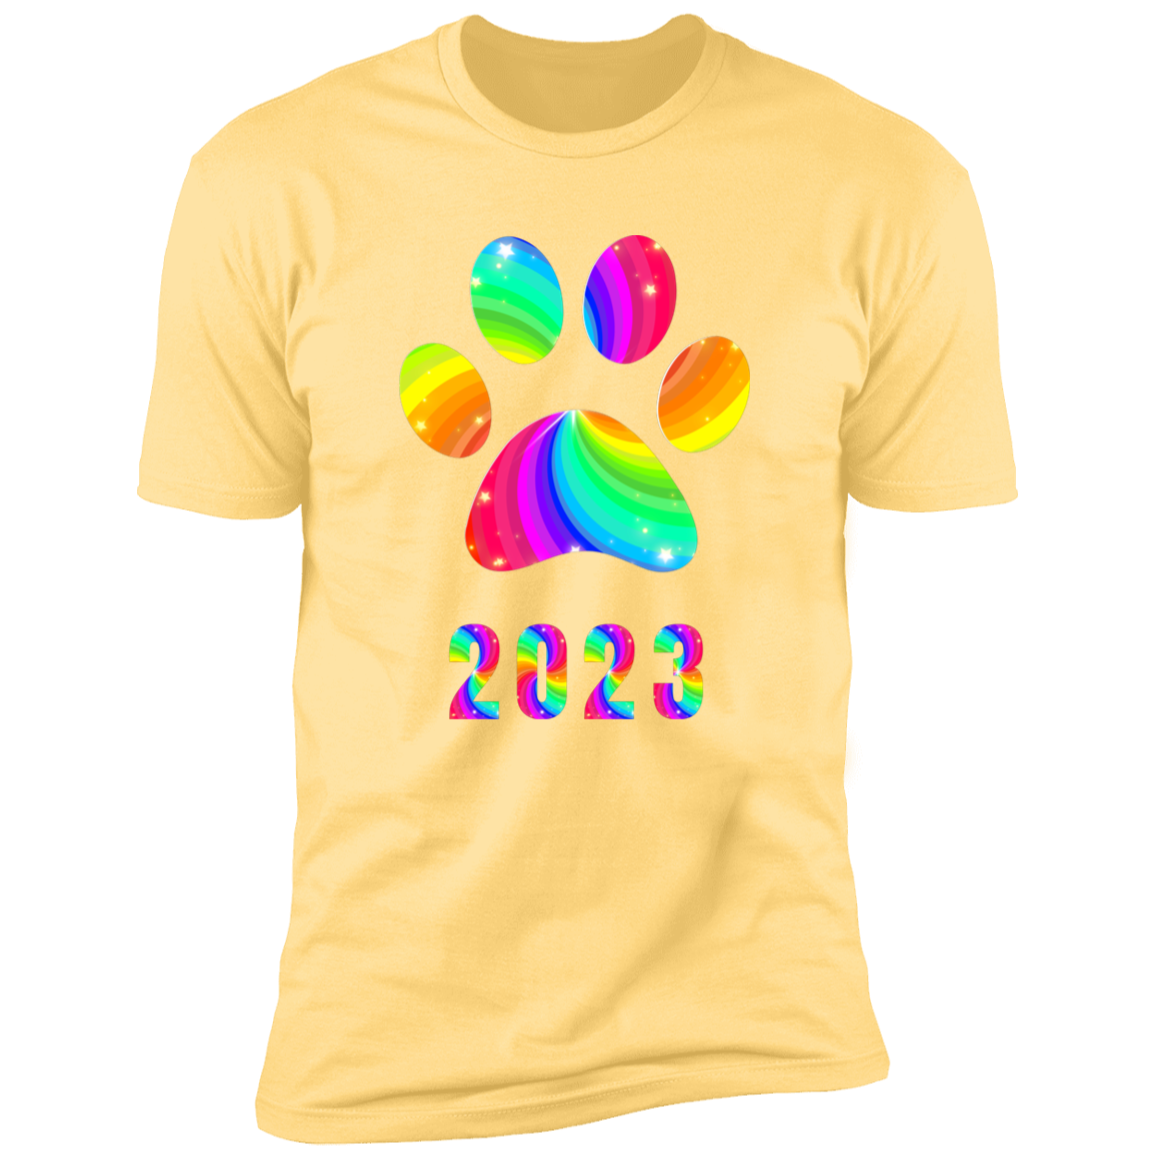 Pride Paw 2023 (Swirl) Pride T-shirt, Paw Pride Dog Shirt for humans, in banana Cream